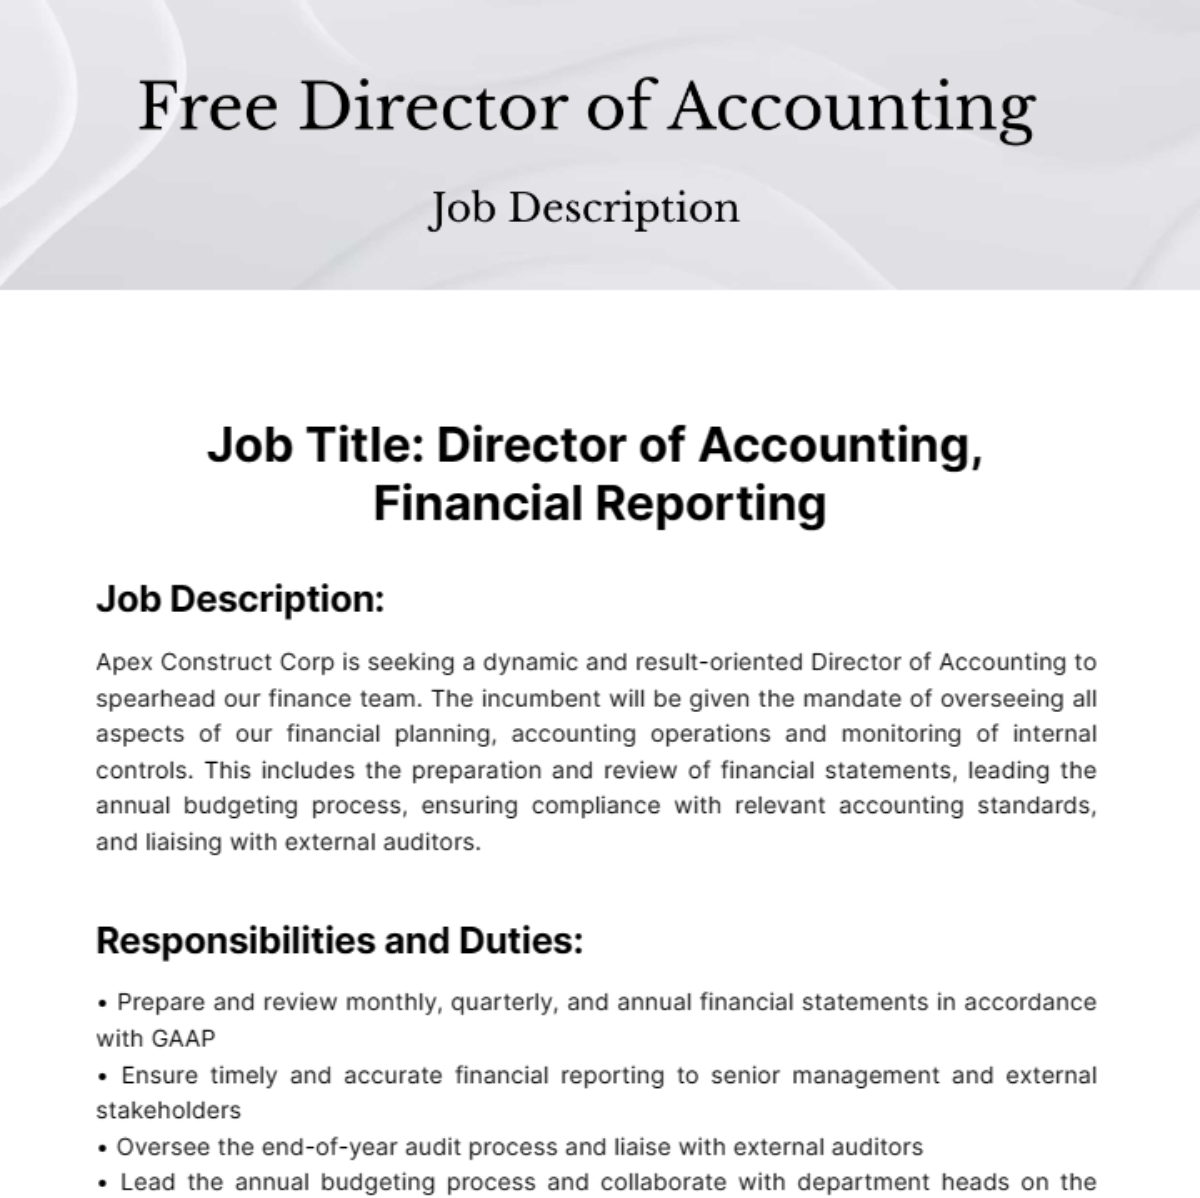 Director of Accounting Job Description Template